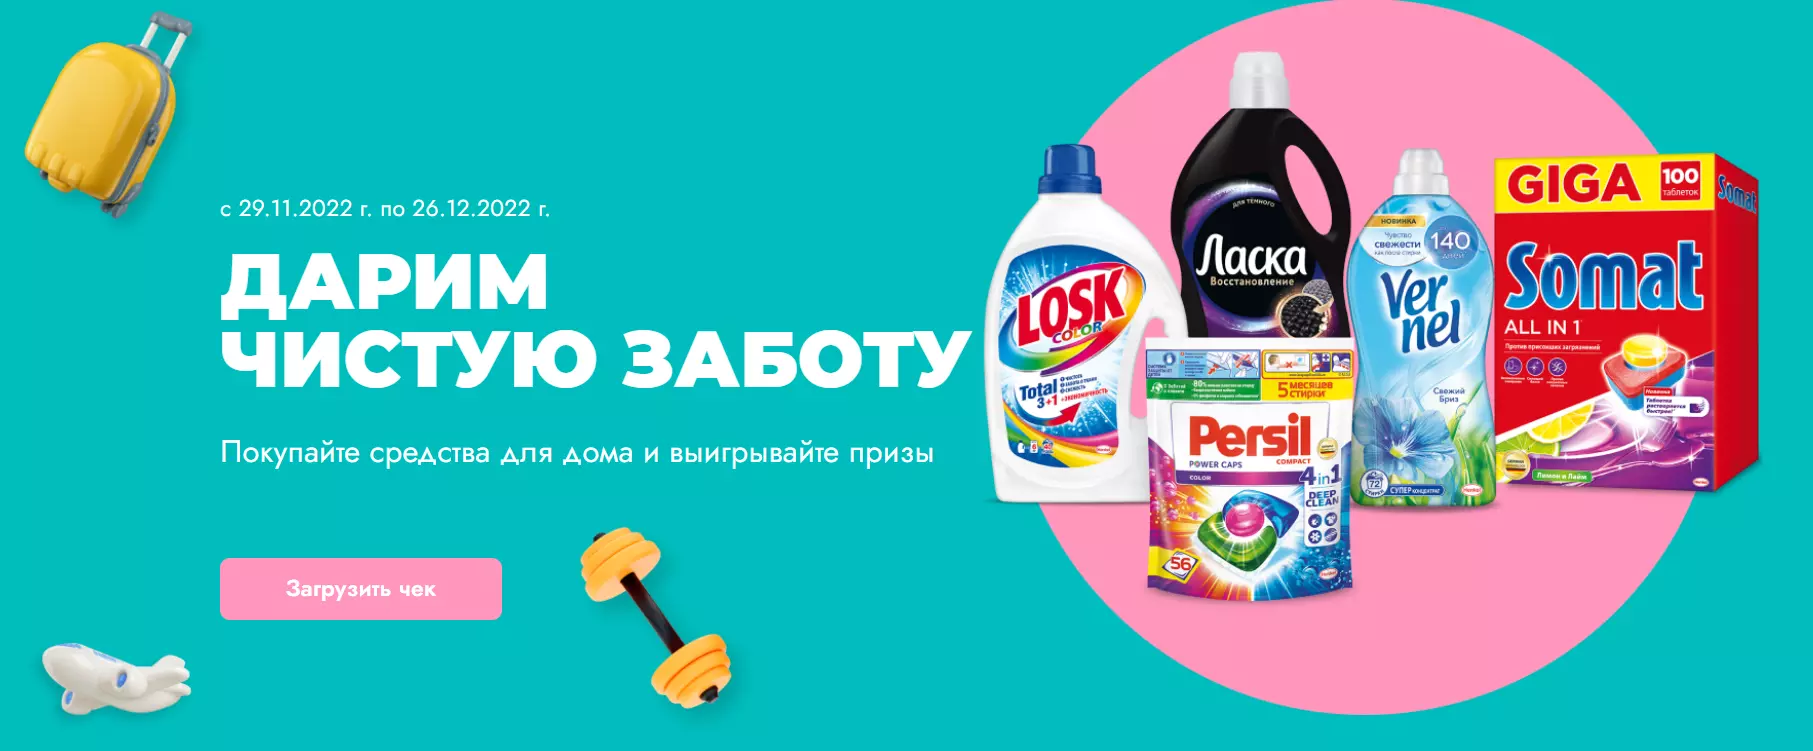 Акция Persil, Ласка, Vernel, Losk, Bref, Somat и Ozon.ru: «Дарим чистую заботу!»